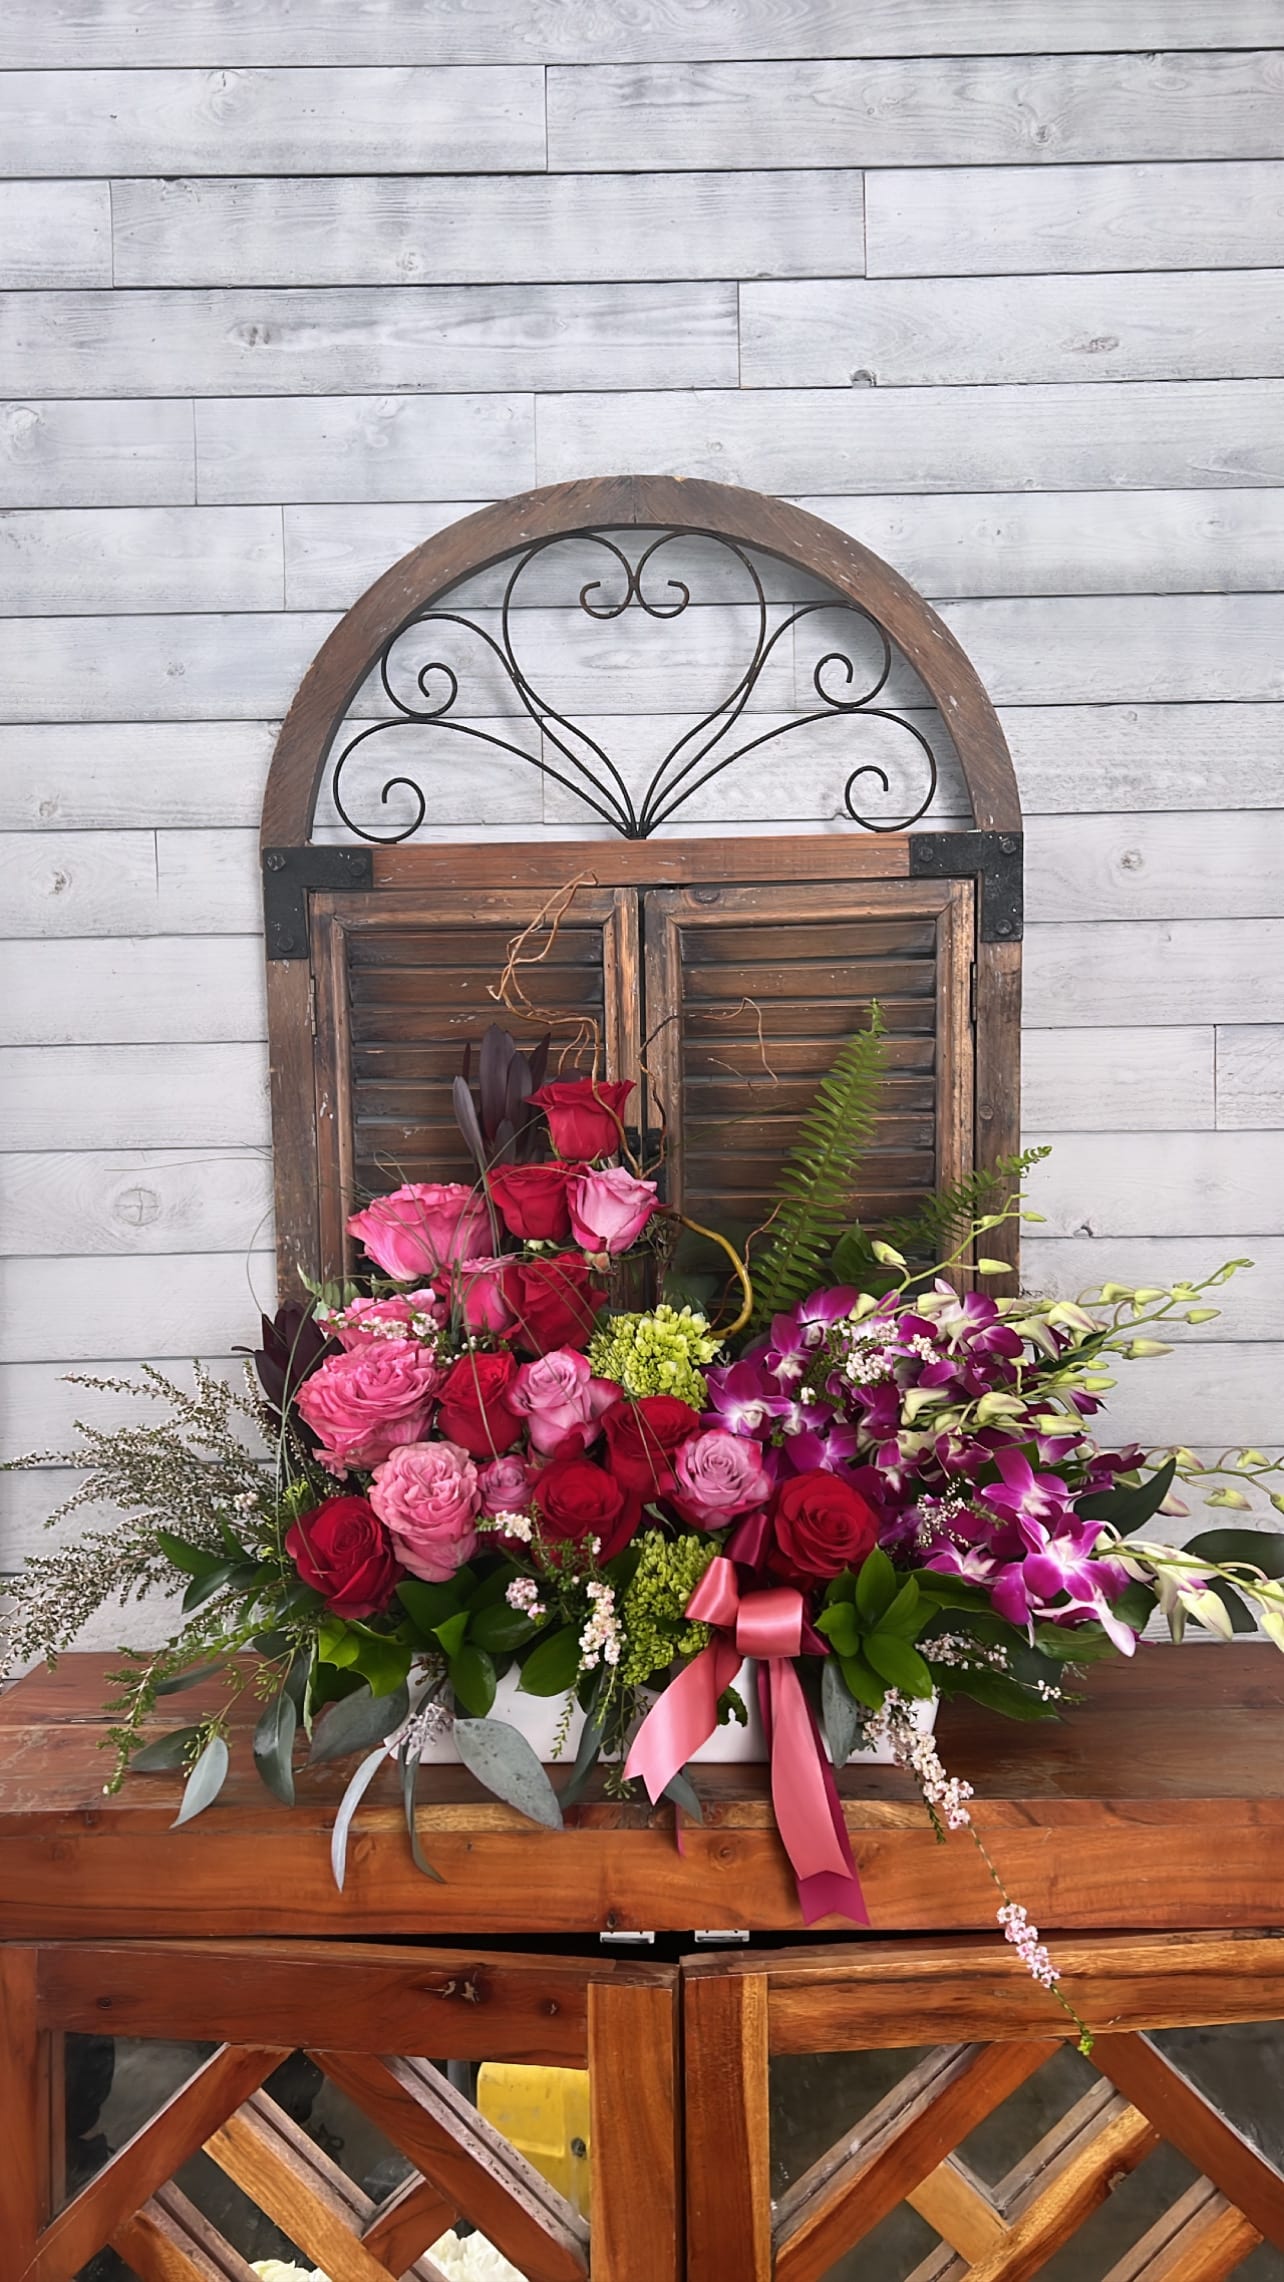 Still I do love u! - Rend and pinks palette color flowers